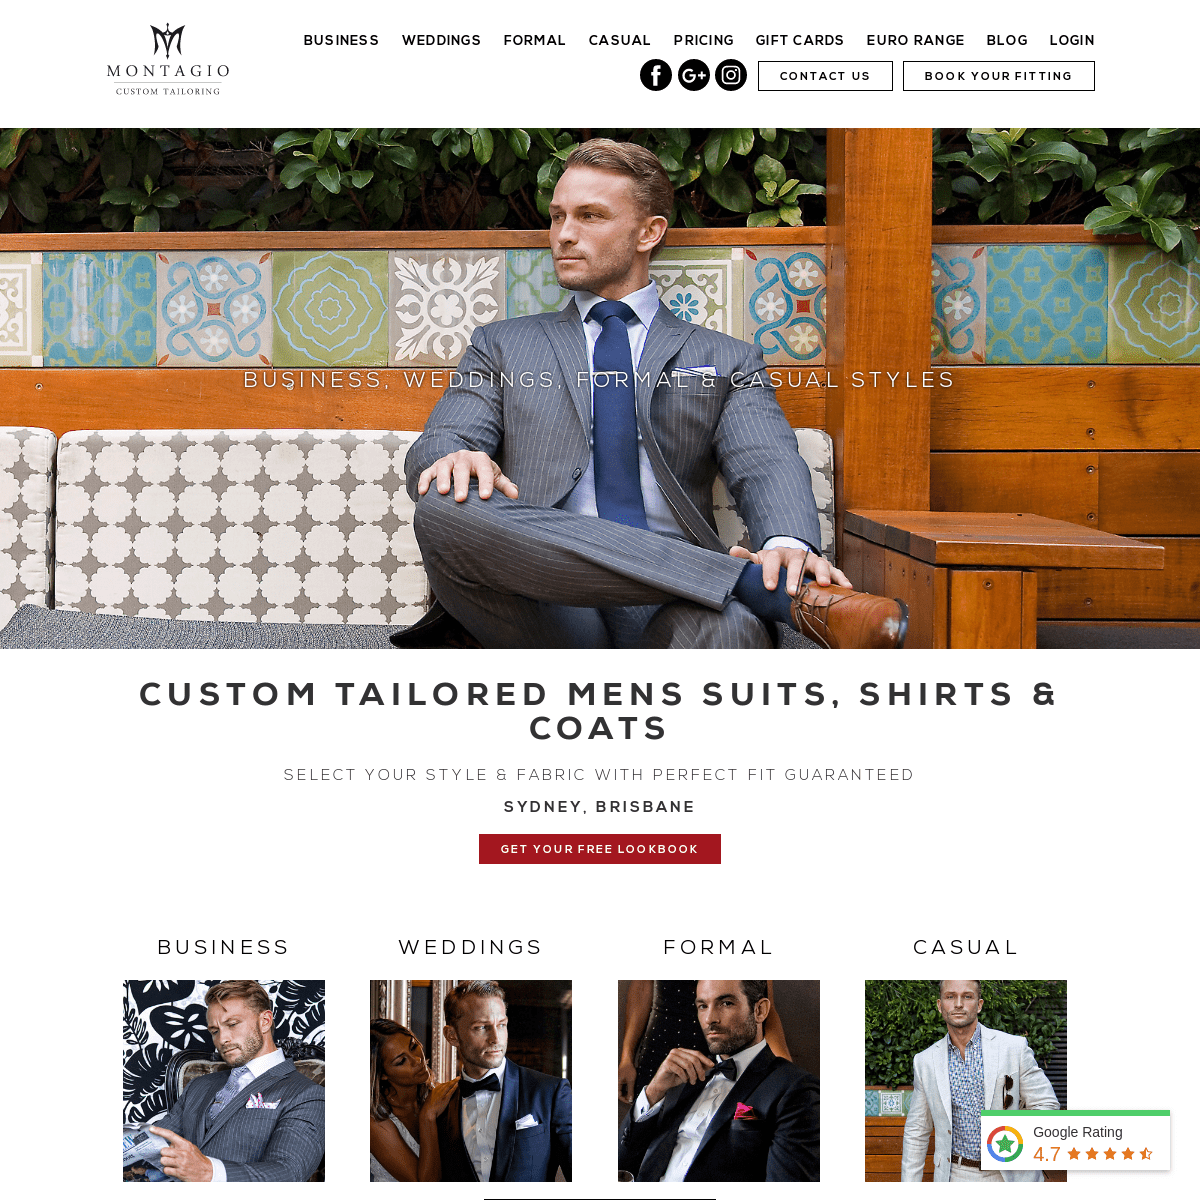 Tailored Mens Suits | Montagio Sydney, Brisbane